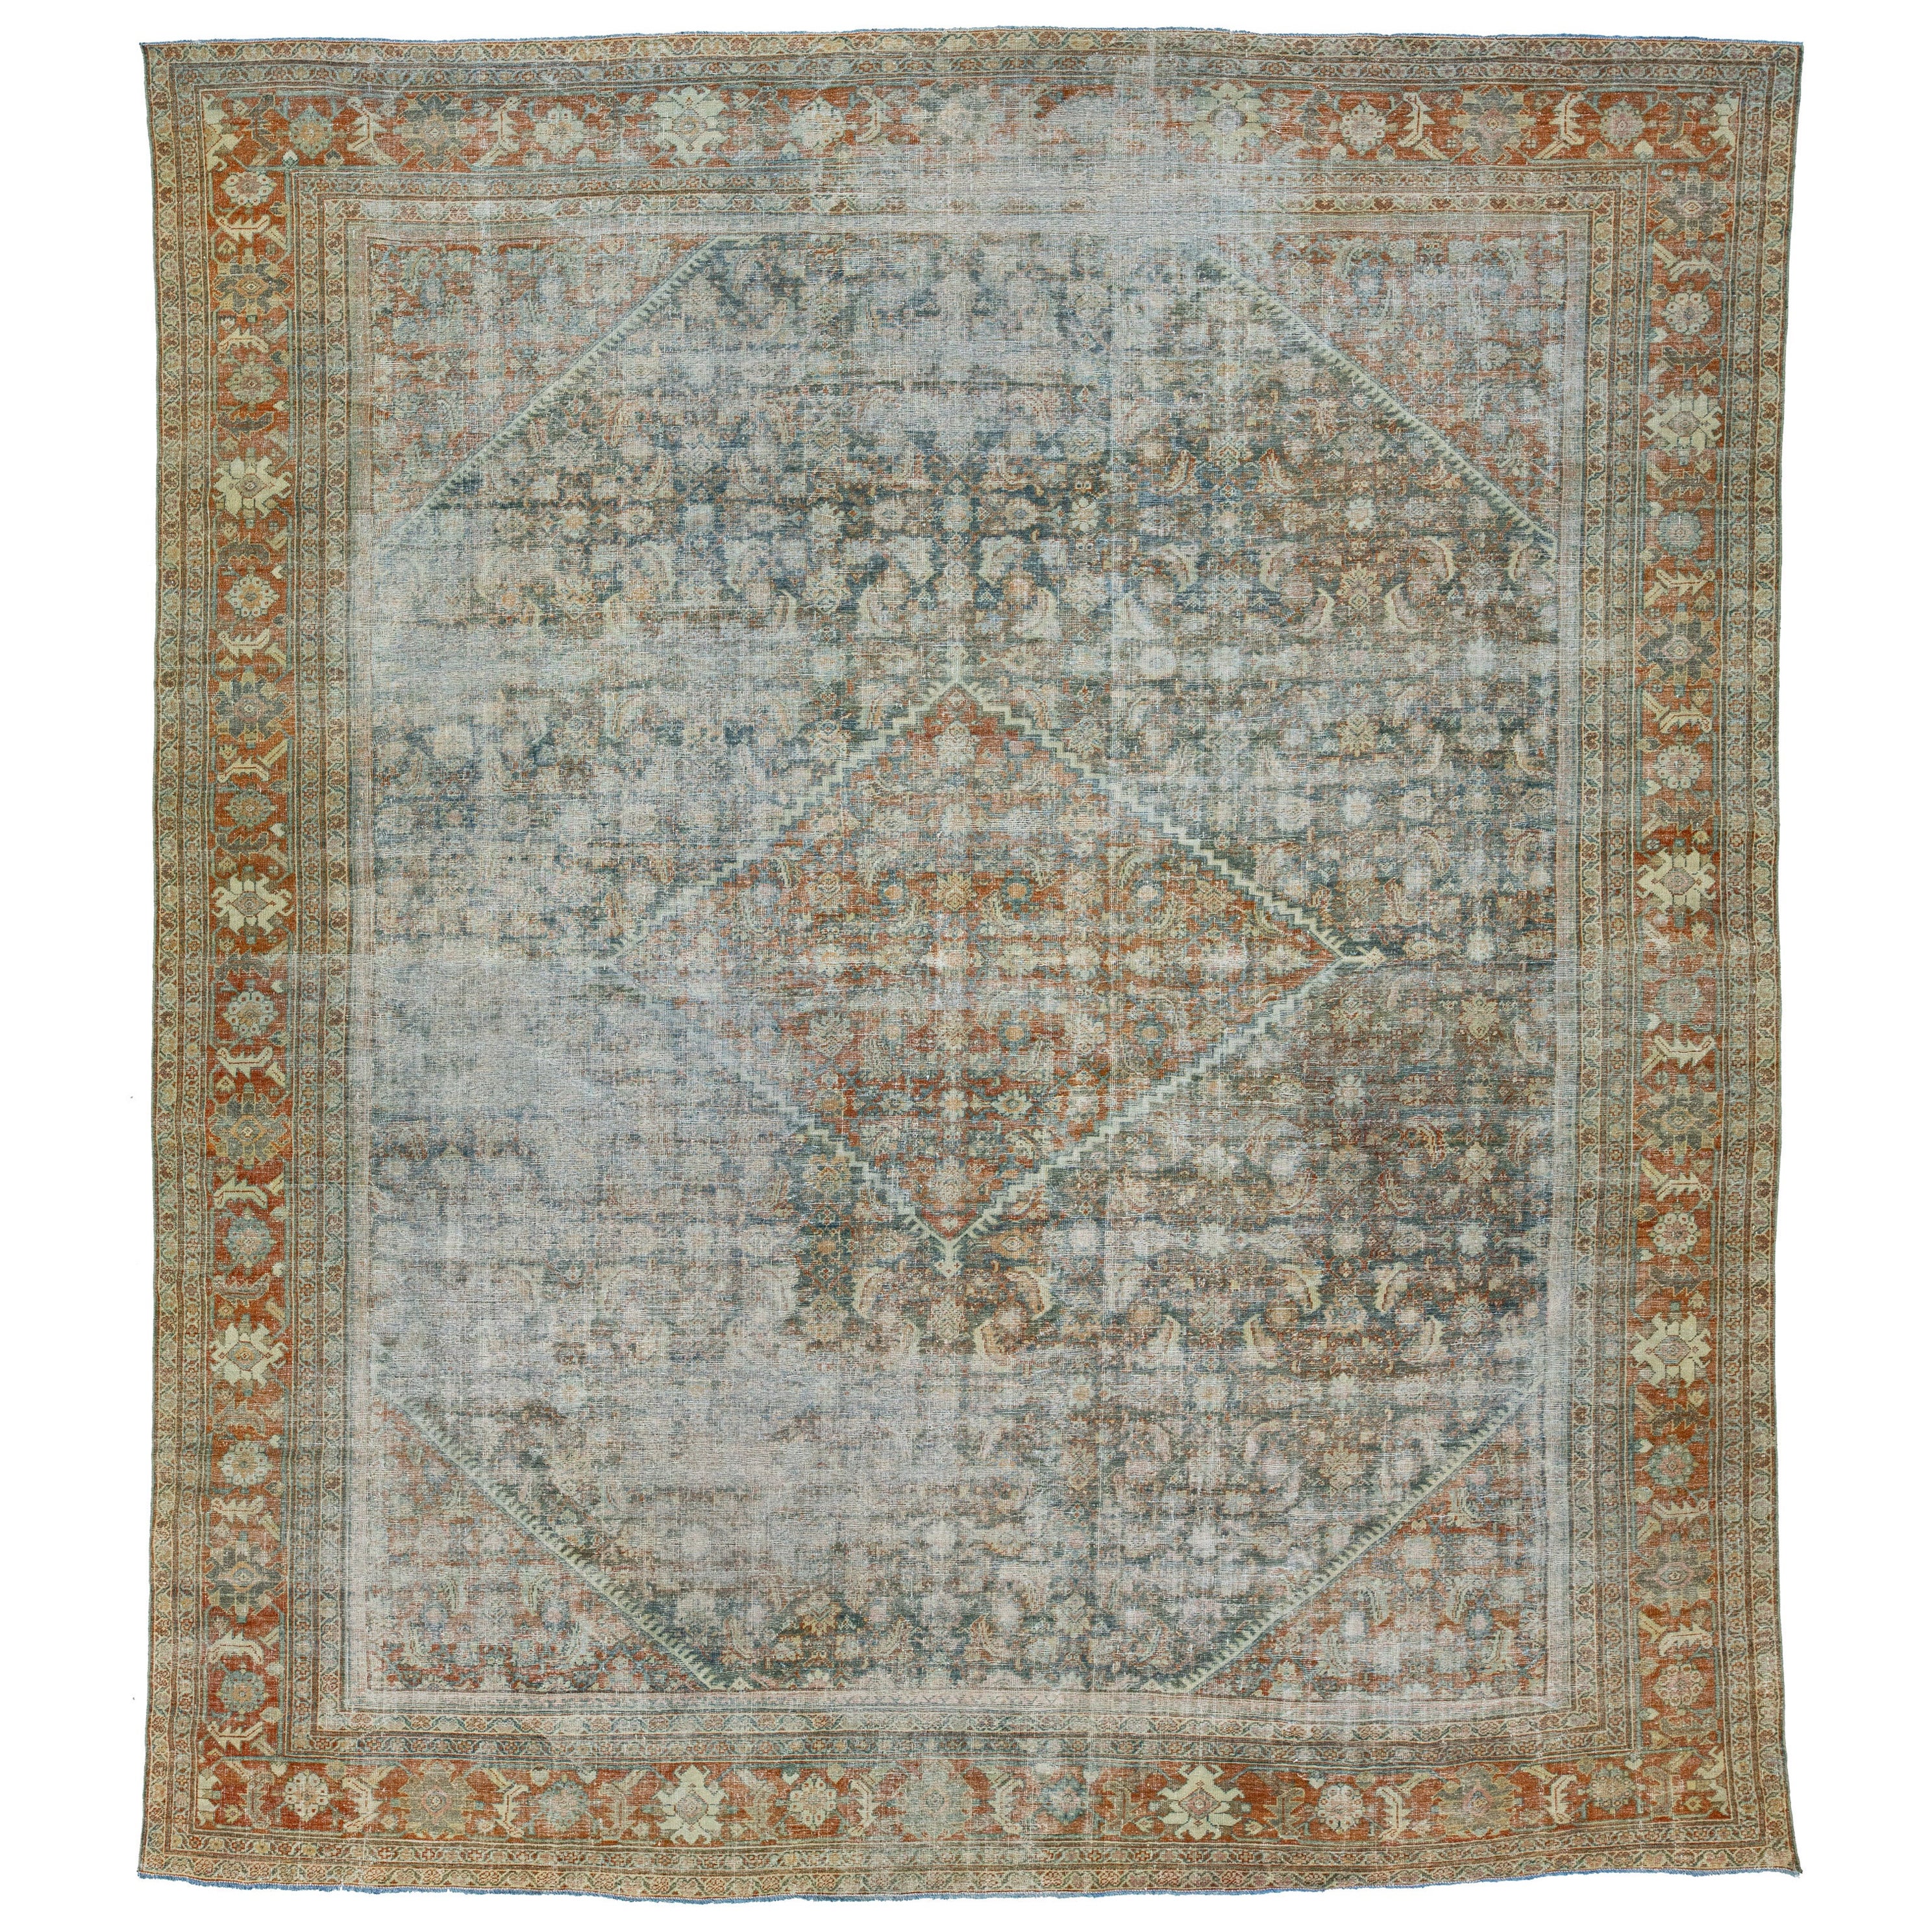 1910s Antike persische Mahal Allover Wolle Teppich handgefertigt in Rust Farbe